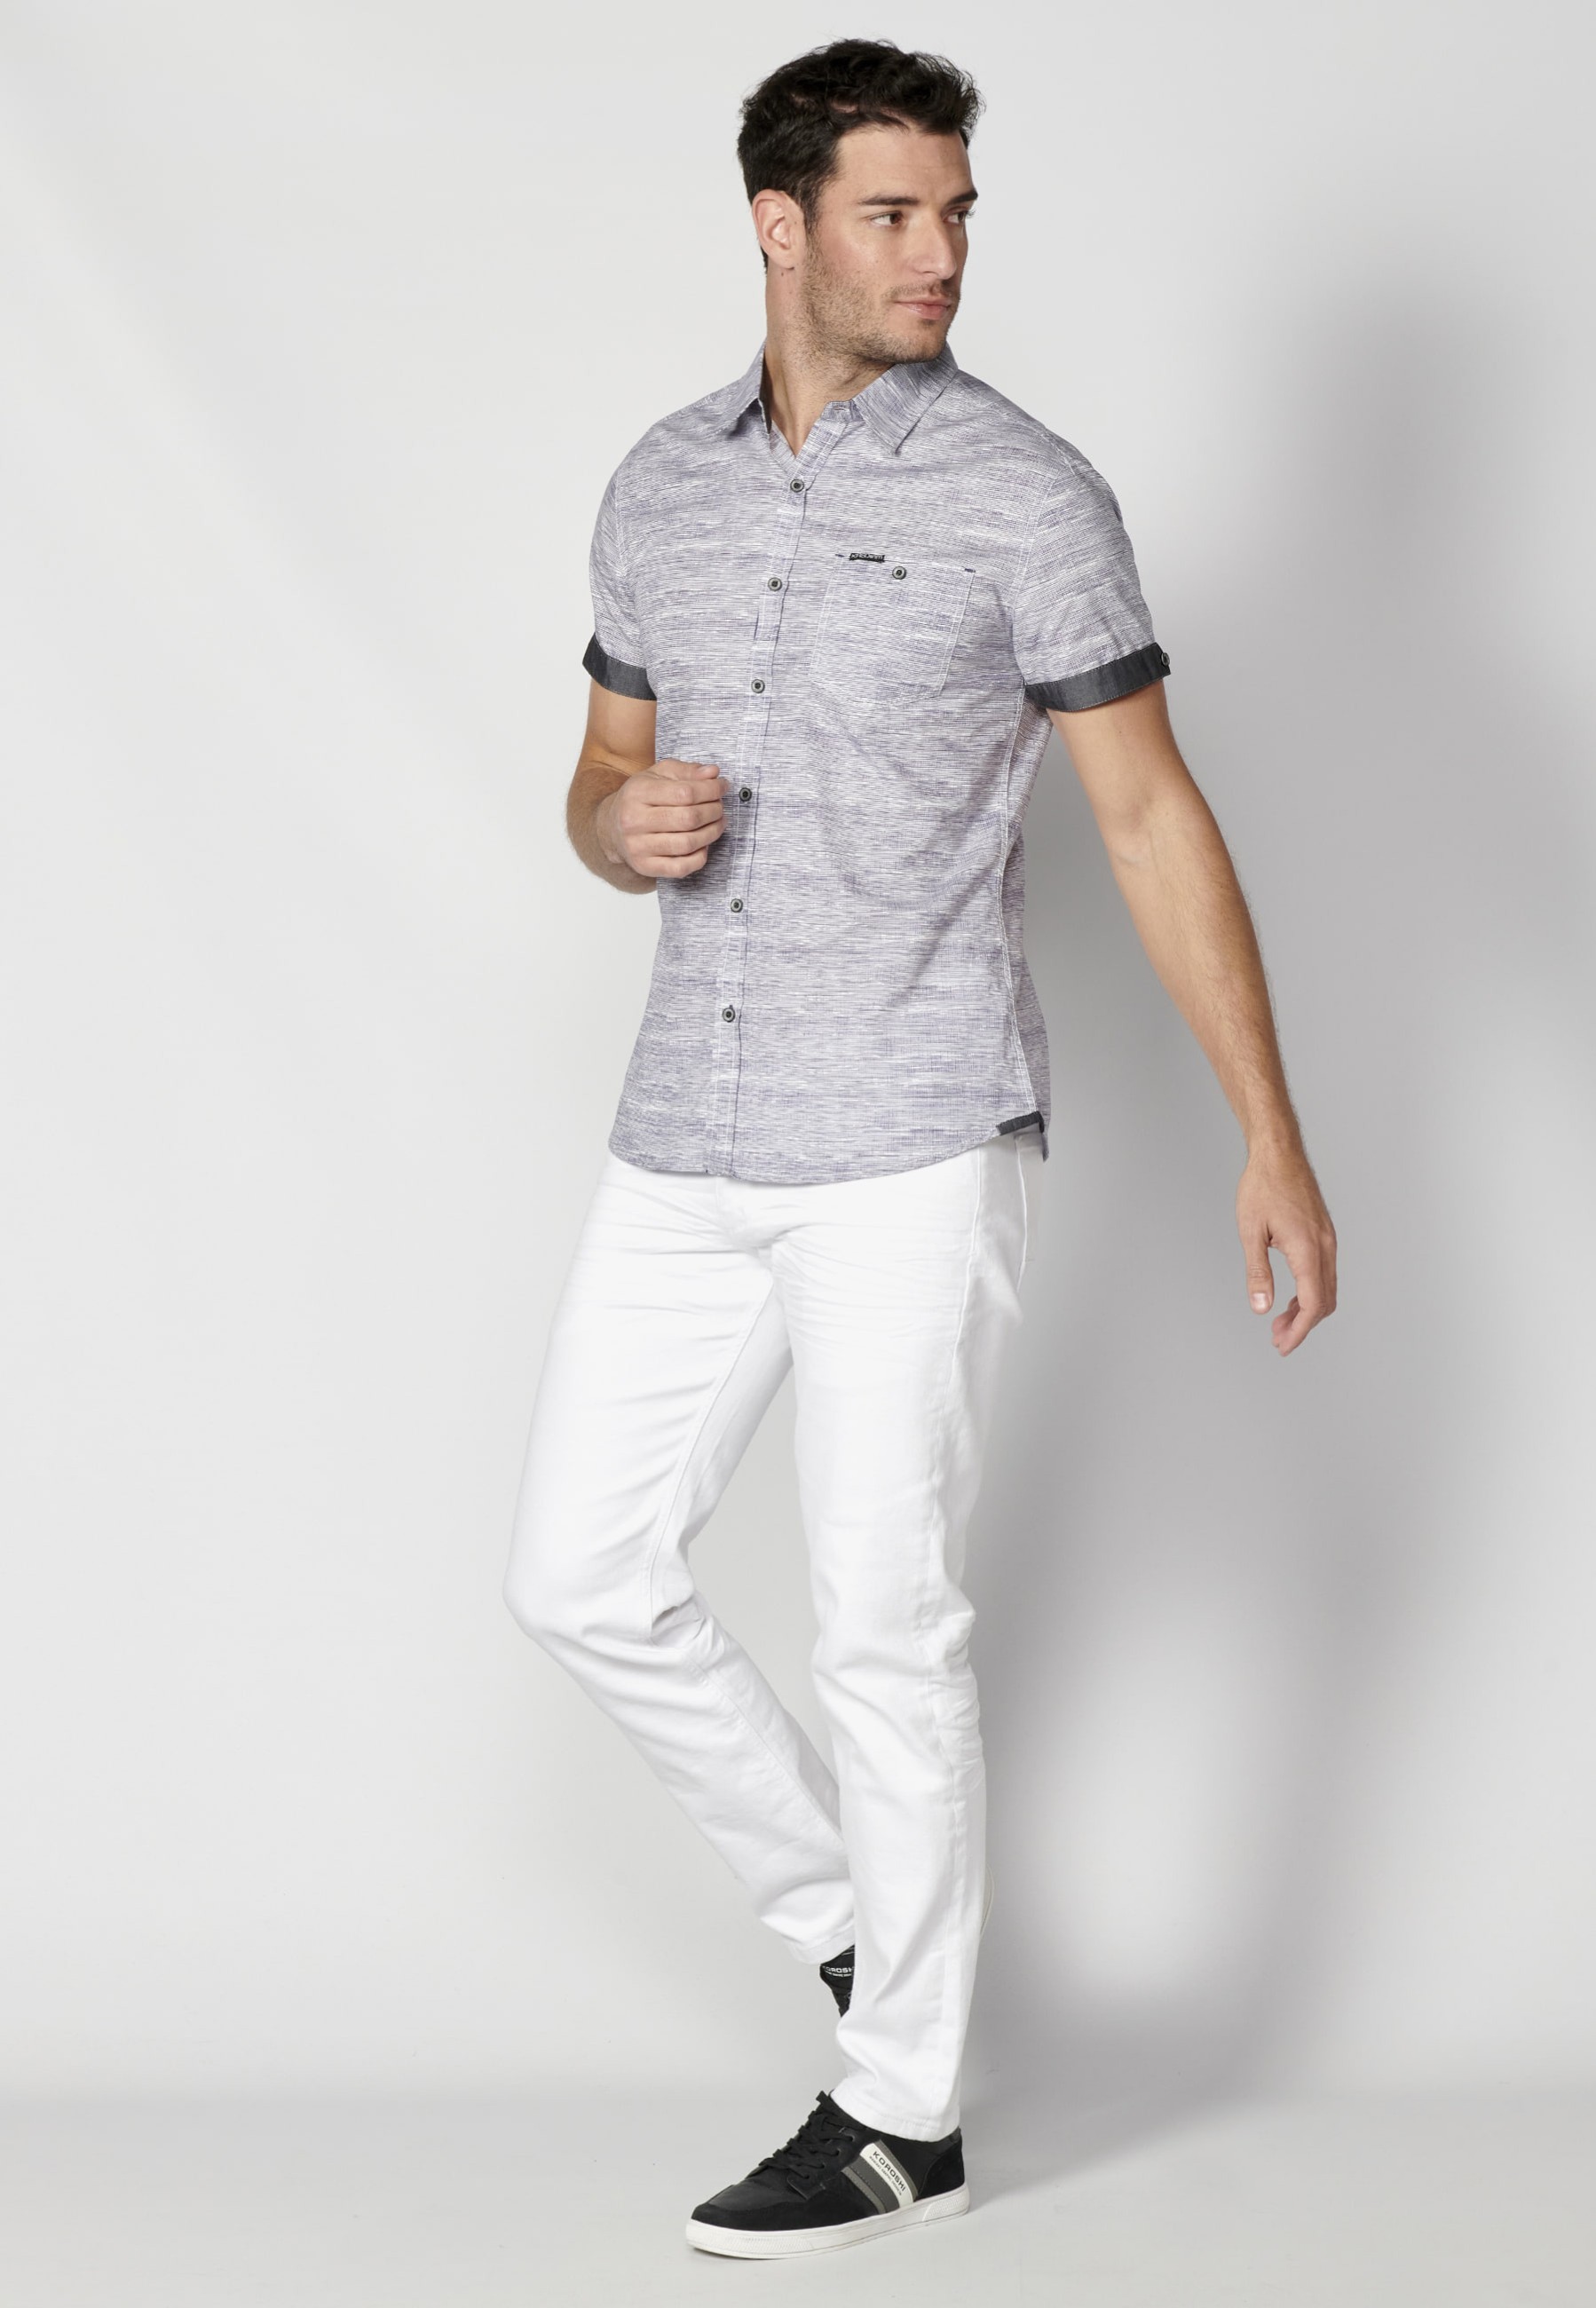 Blue short-sleeved cotton shirt for Men